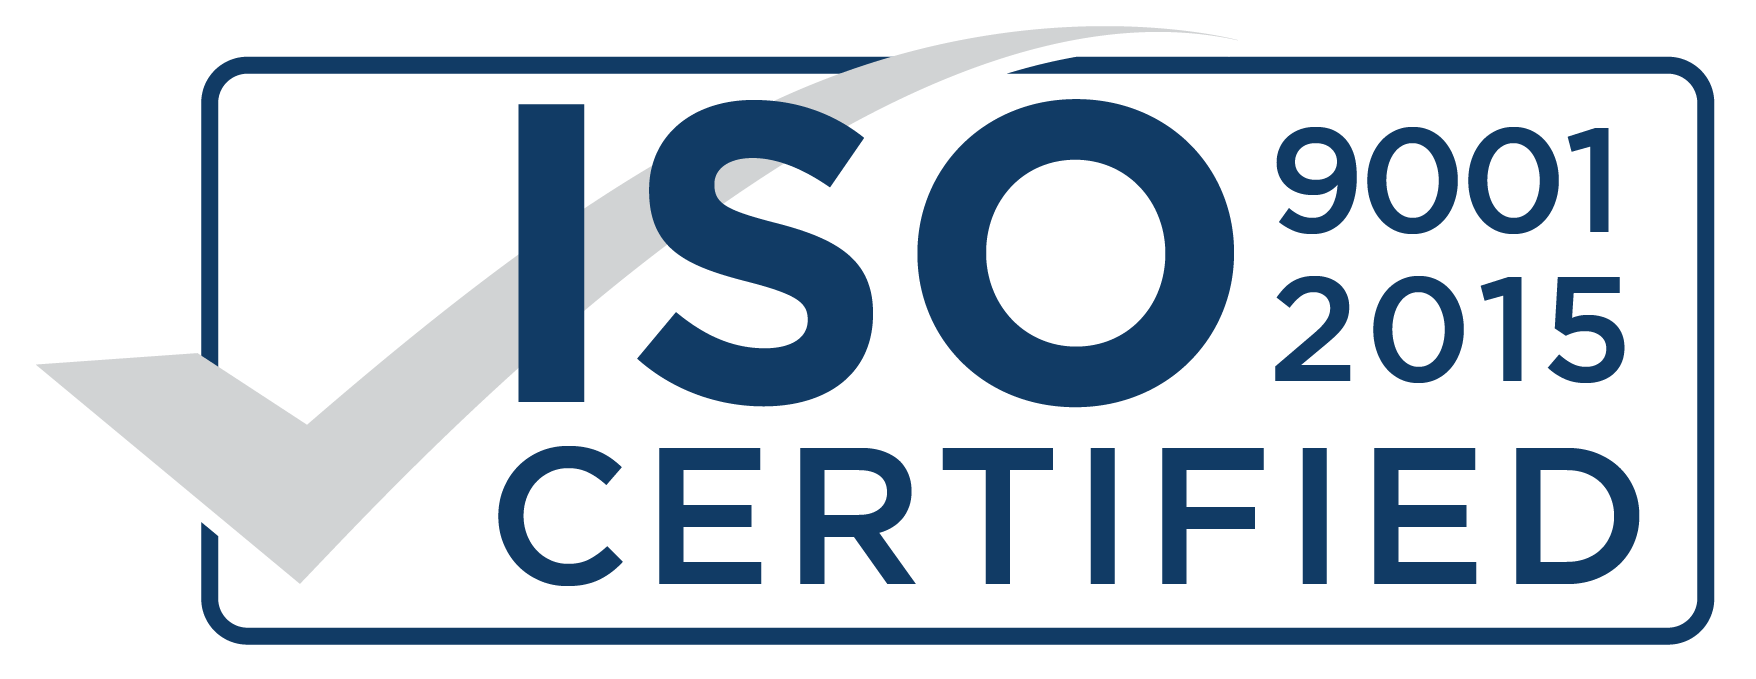 MORQUÍMICA é certificada pela norma ISO 9001:2015